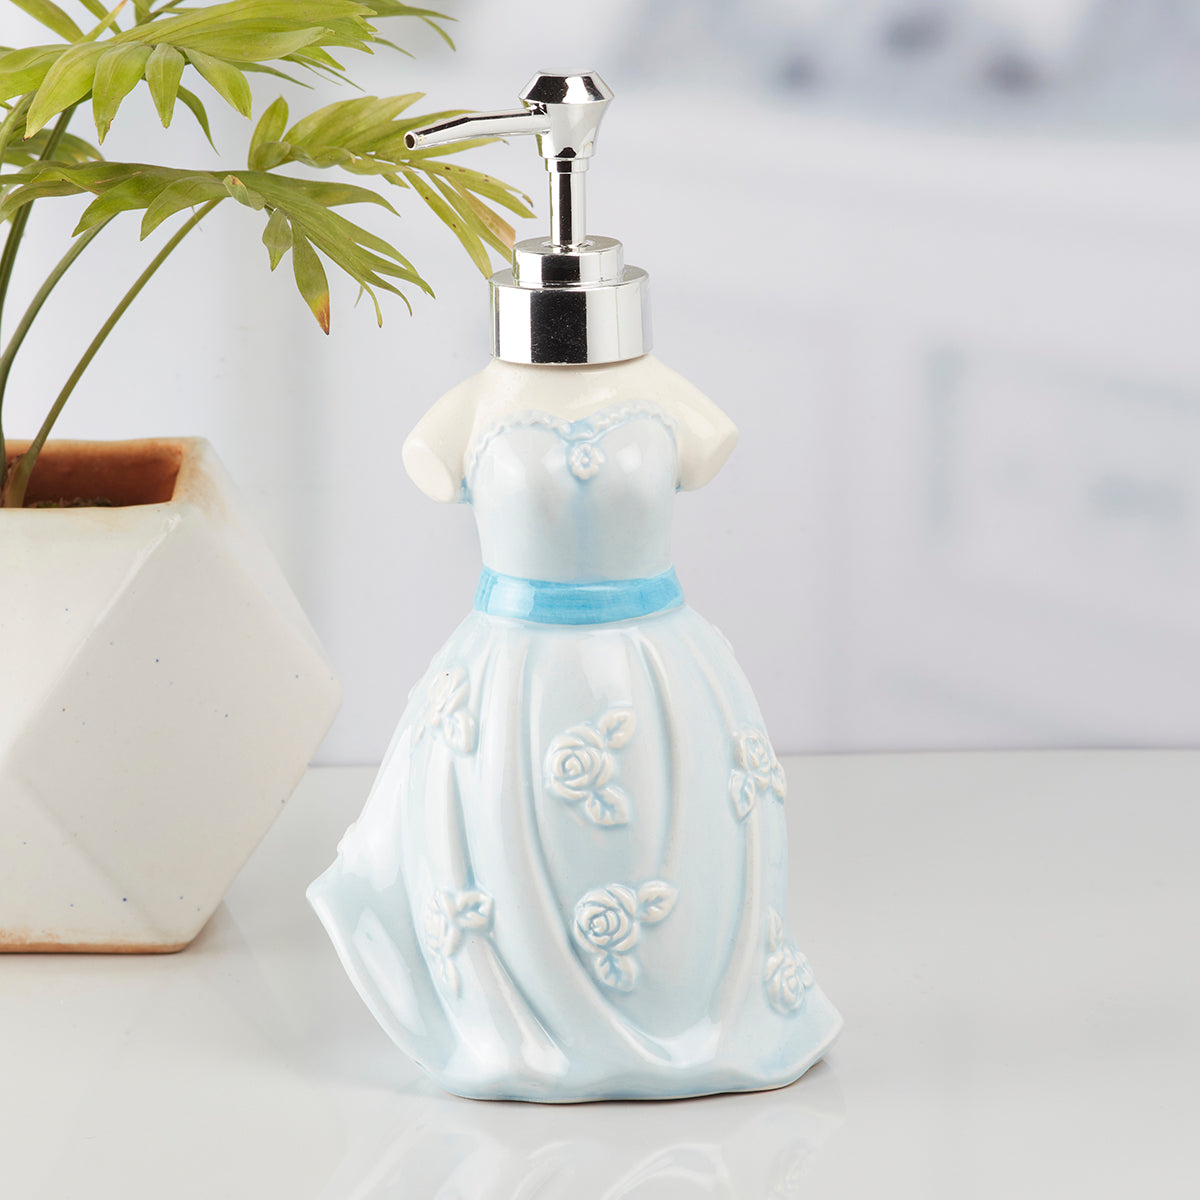 Ceramic Soap Dispenser handwash Pump for Bathroom, Set of 1, Blue (10163)